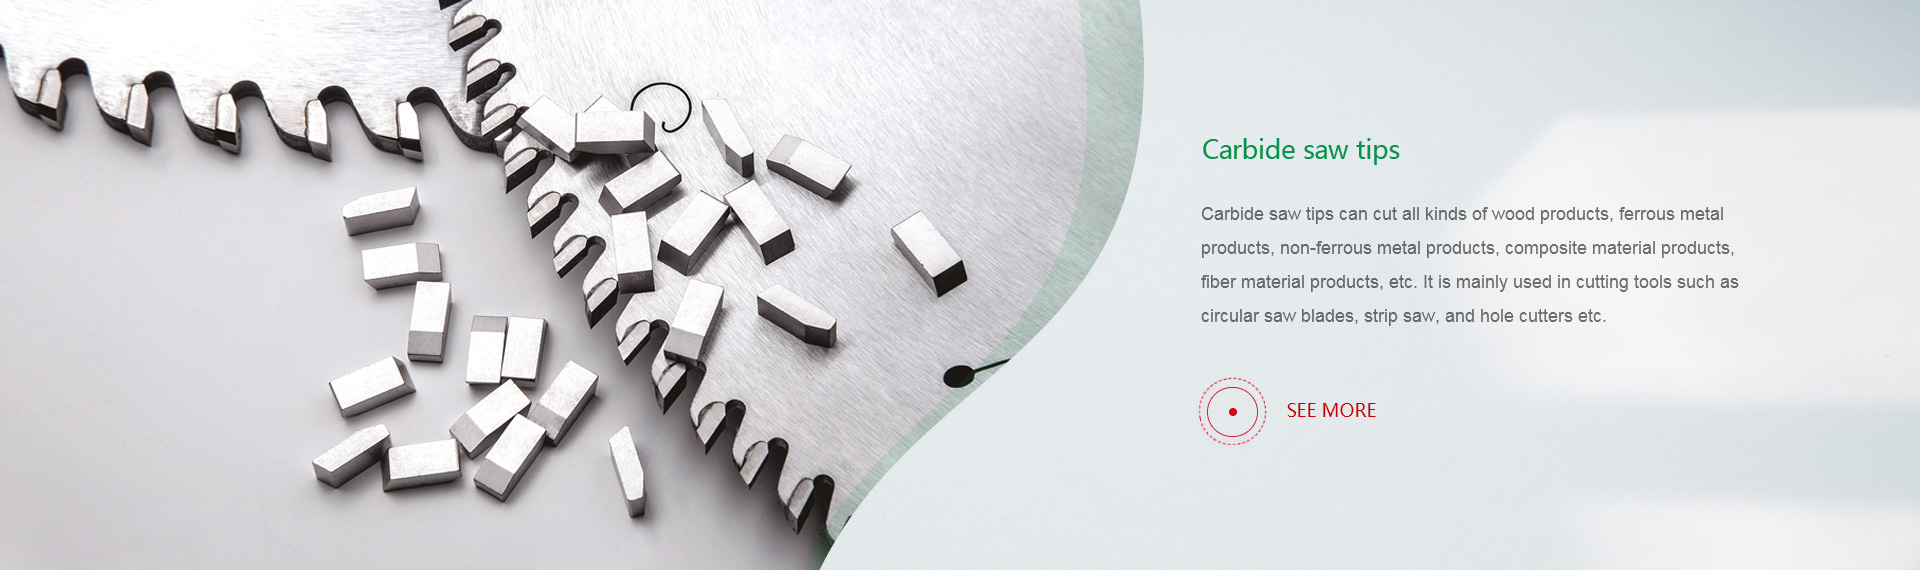 Carbide saw tips